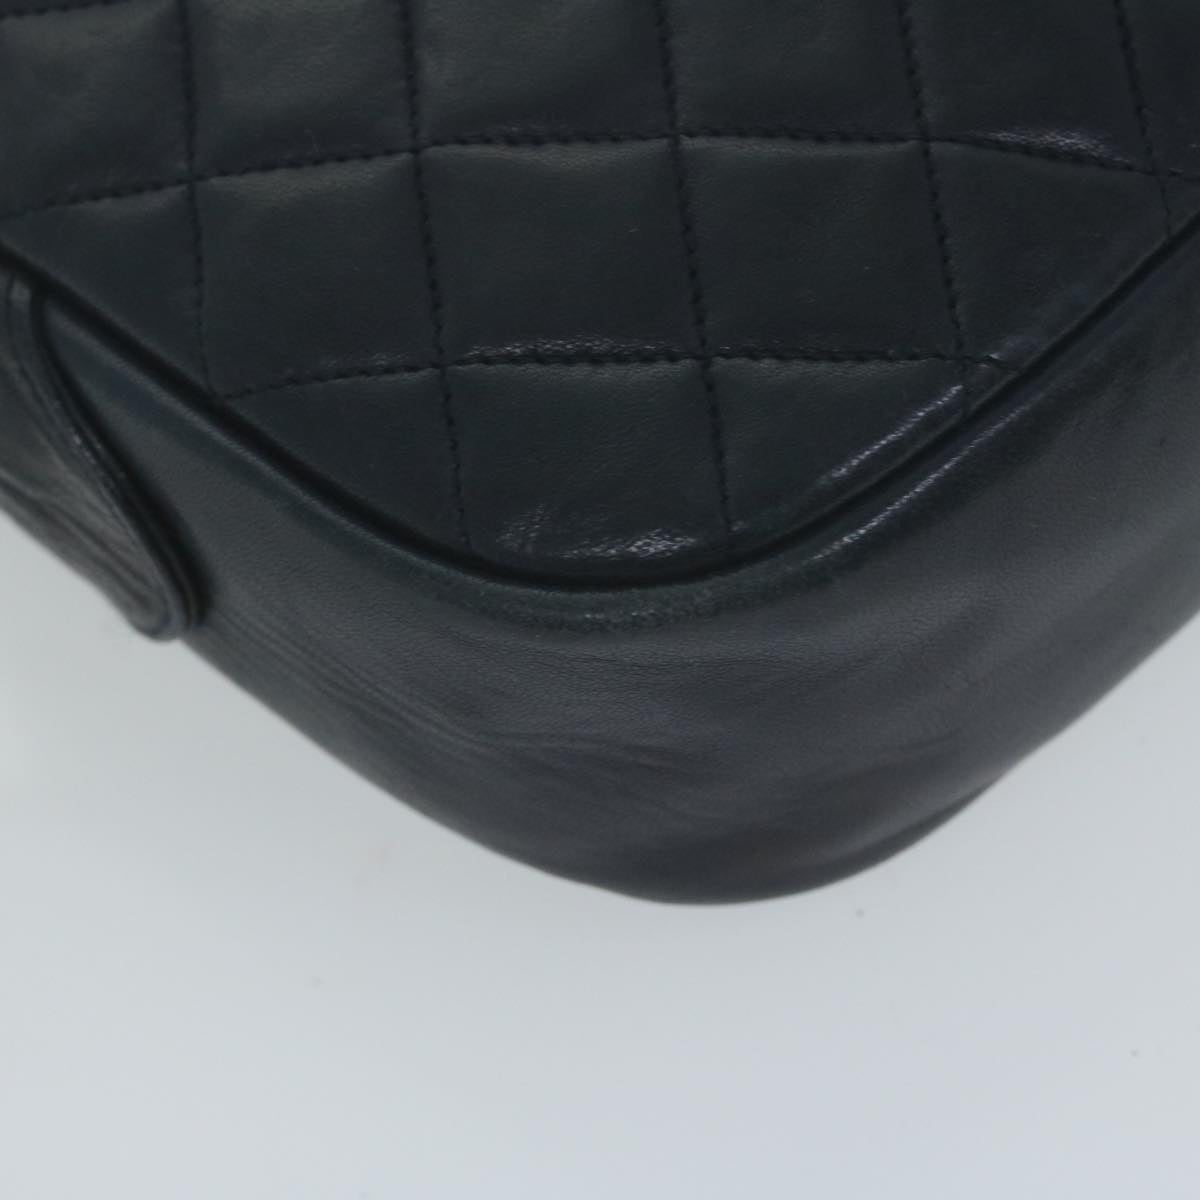 CHANEL Matelasse Chain Shoulder Bag Leather Navy CC Auth 65588